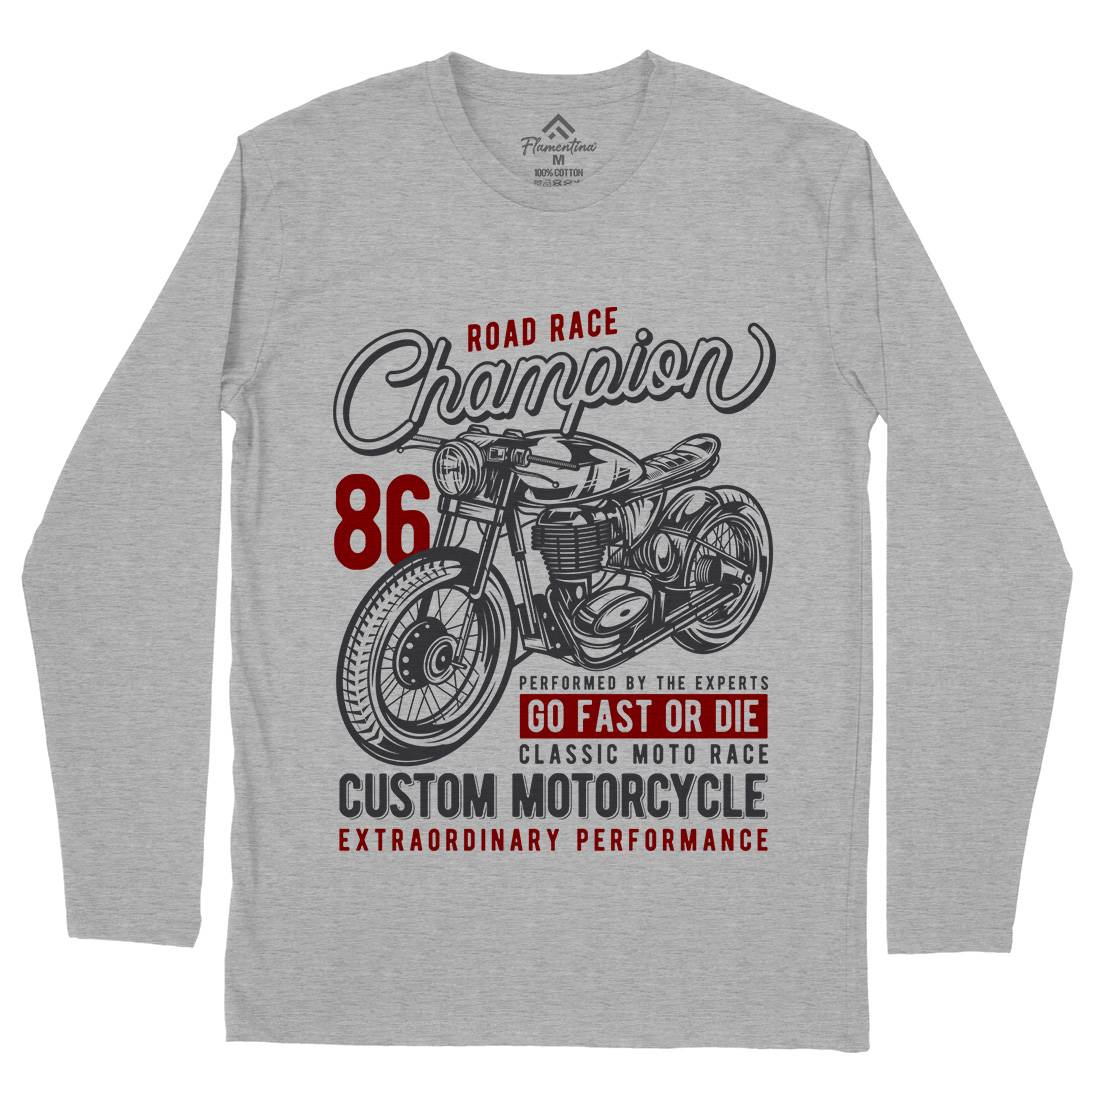 Champion Mens Long Sleeve T-Shirt Motorcycles B830